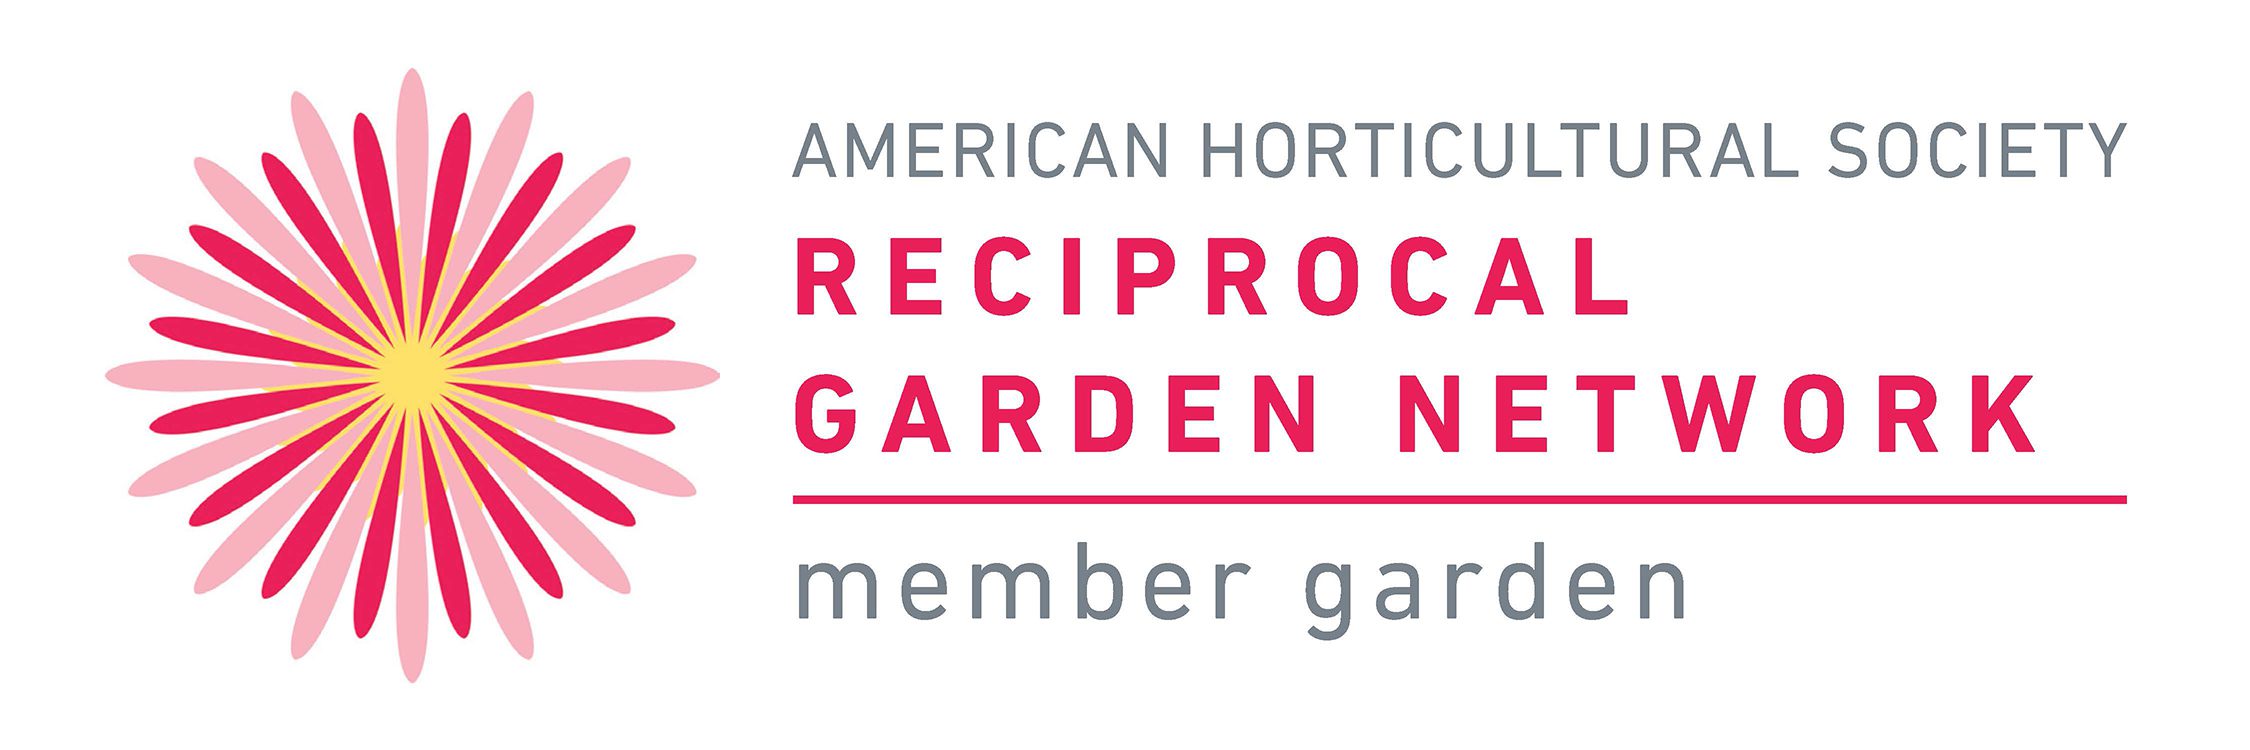 AHS Reciprocal Garden